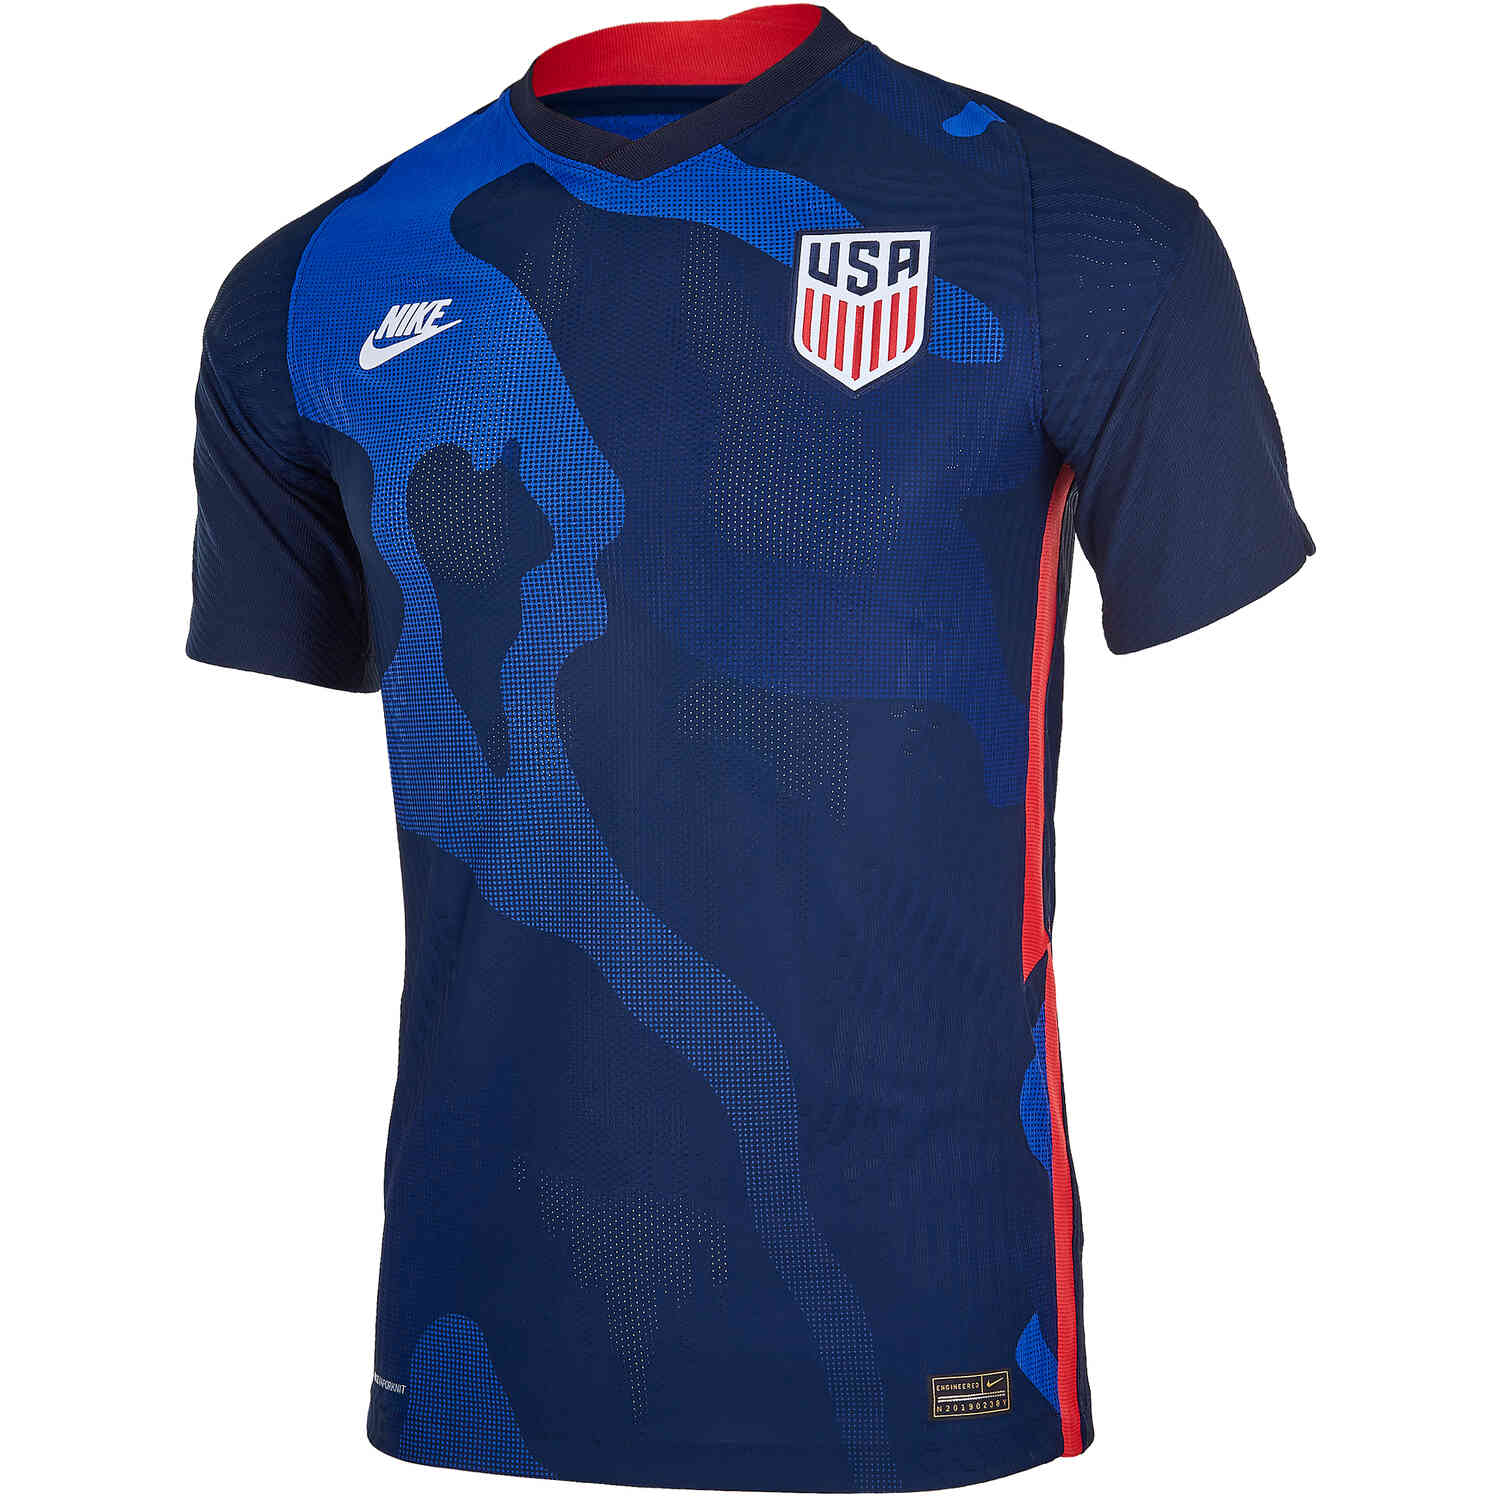 2020 Nike USMNT Away Match Jersey - SoccerPro